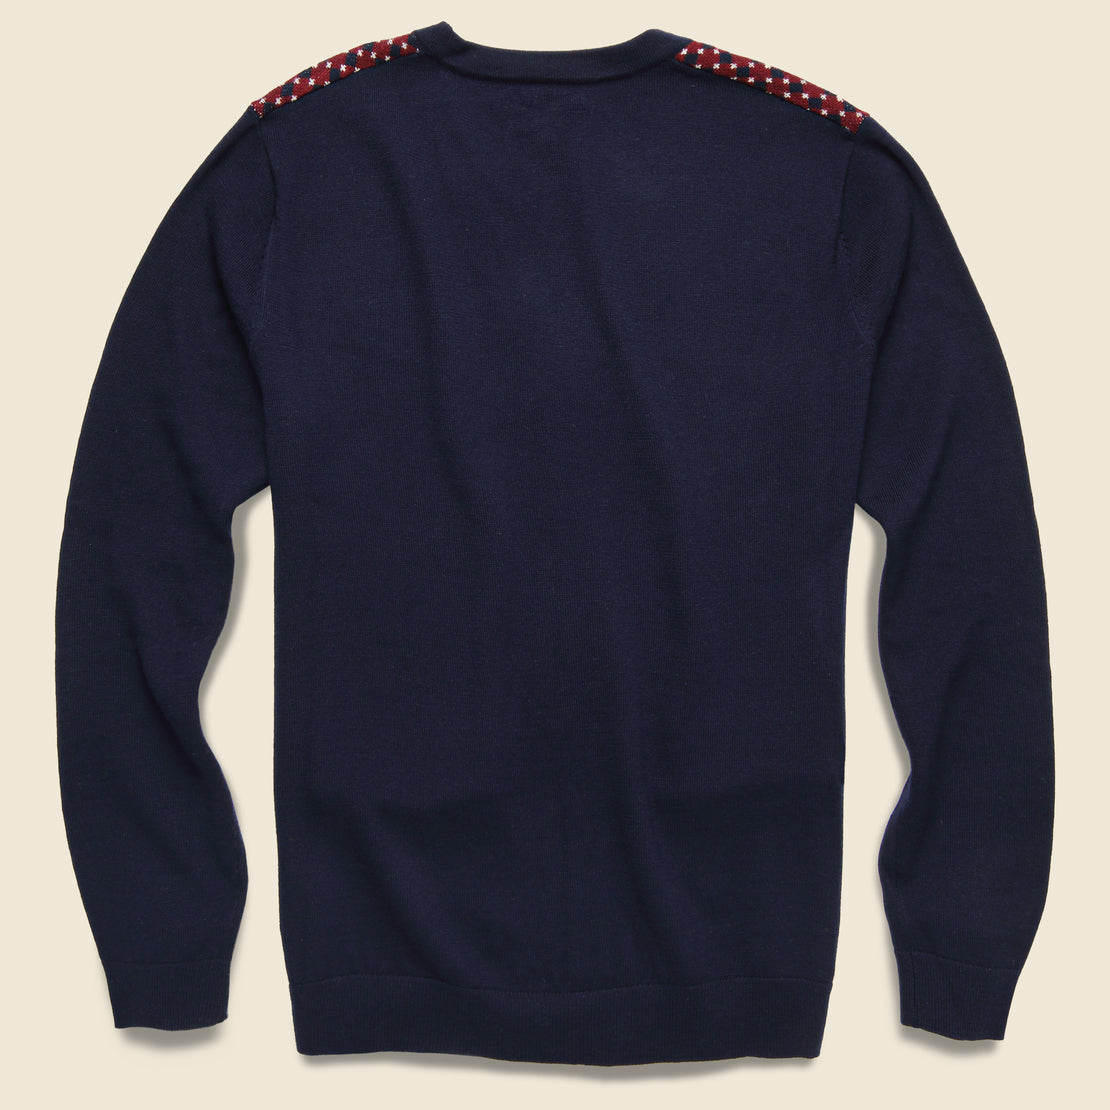 Jacquard Merino Cardigan - Burgundy/Navy - Barque - STAG Provisions - Tops - Sweater